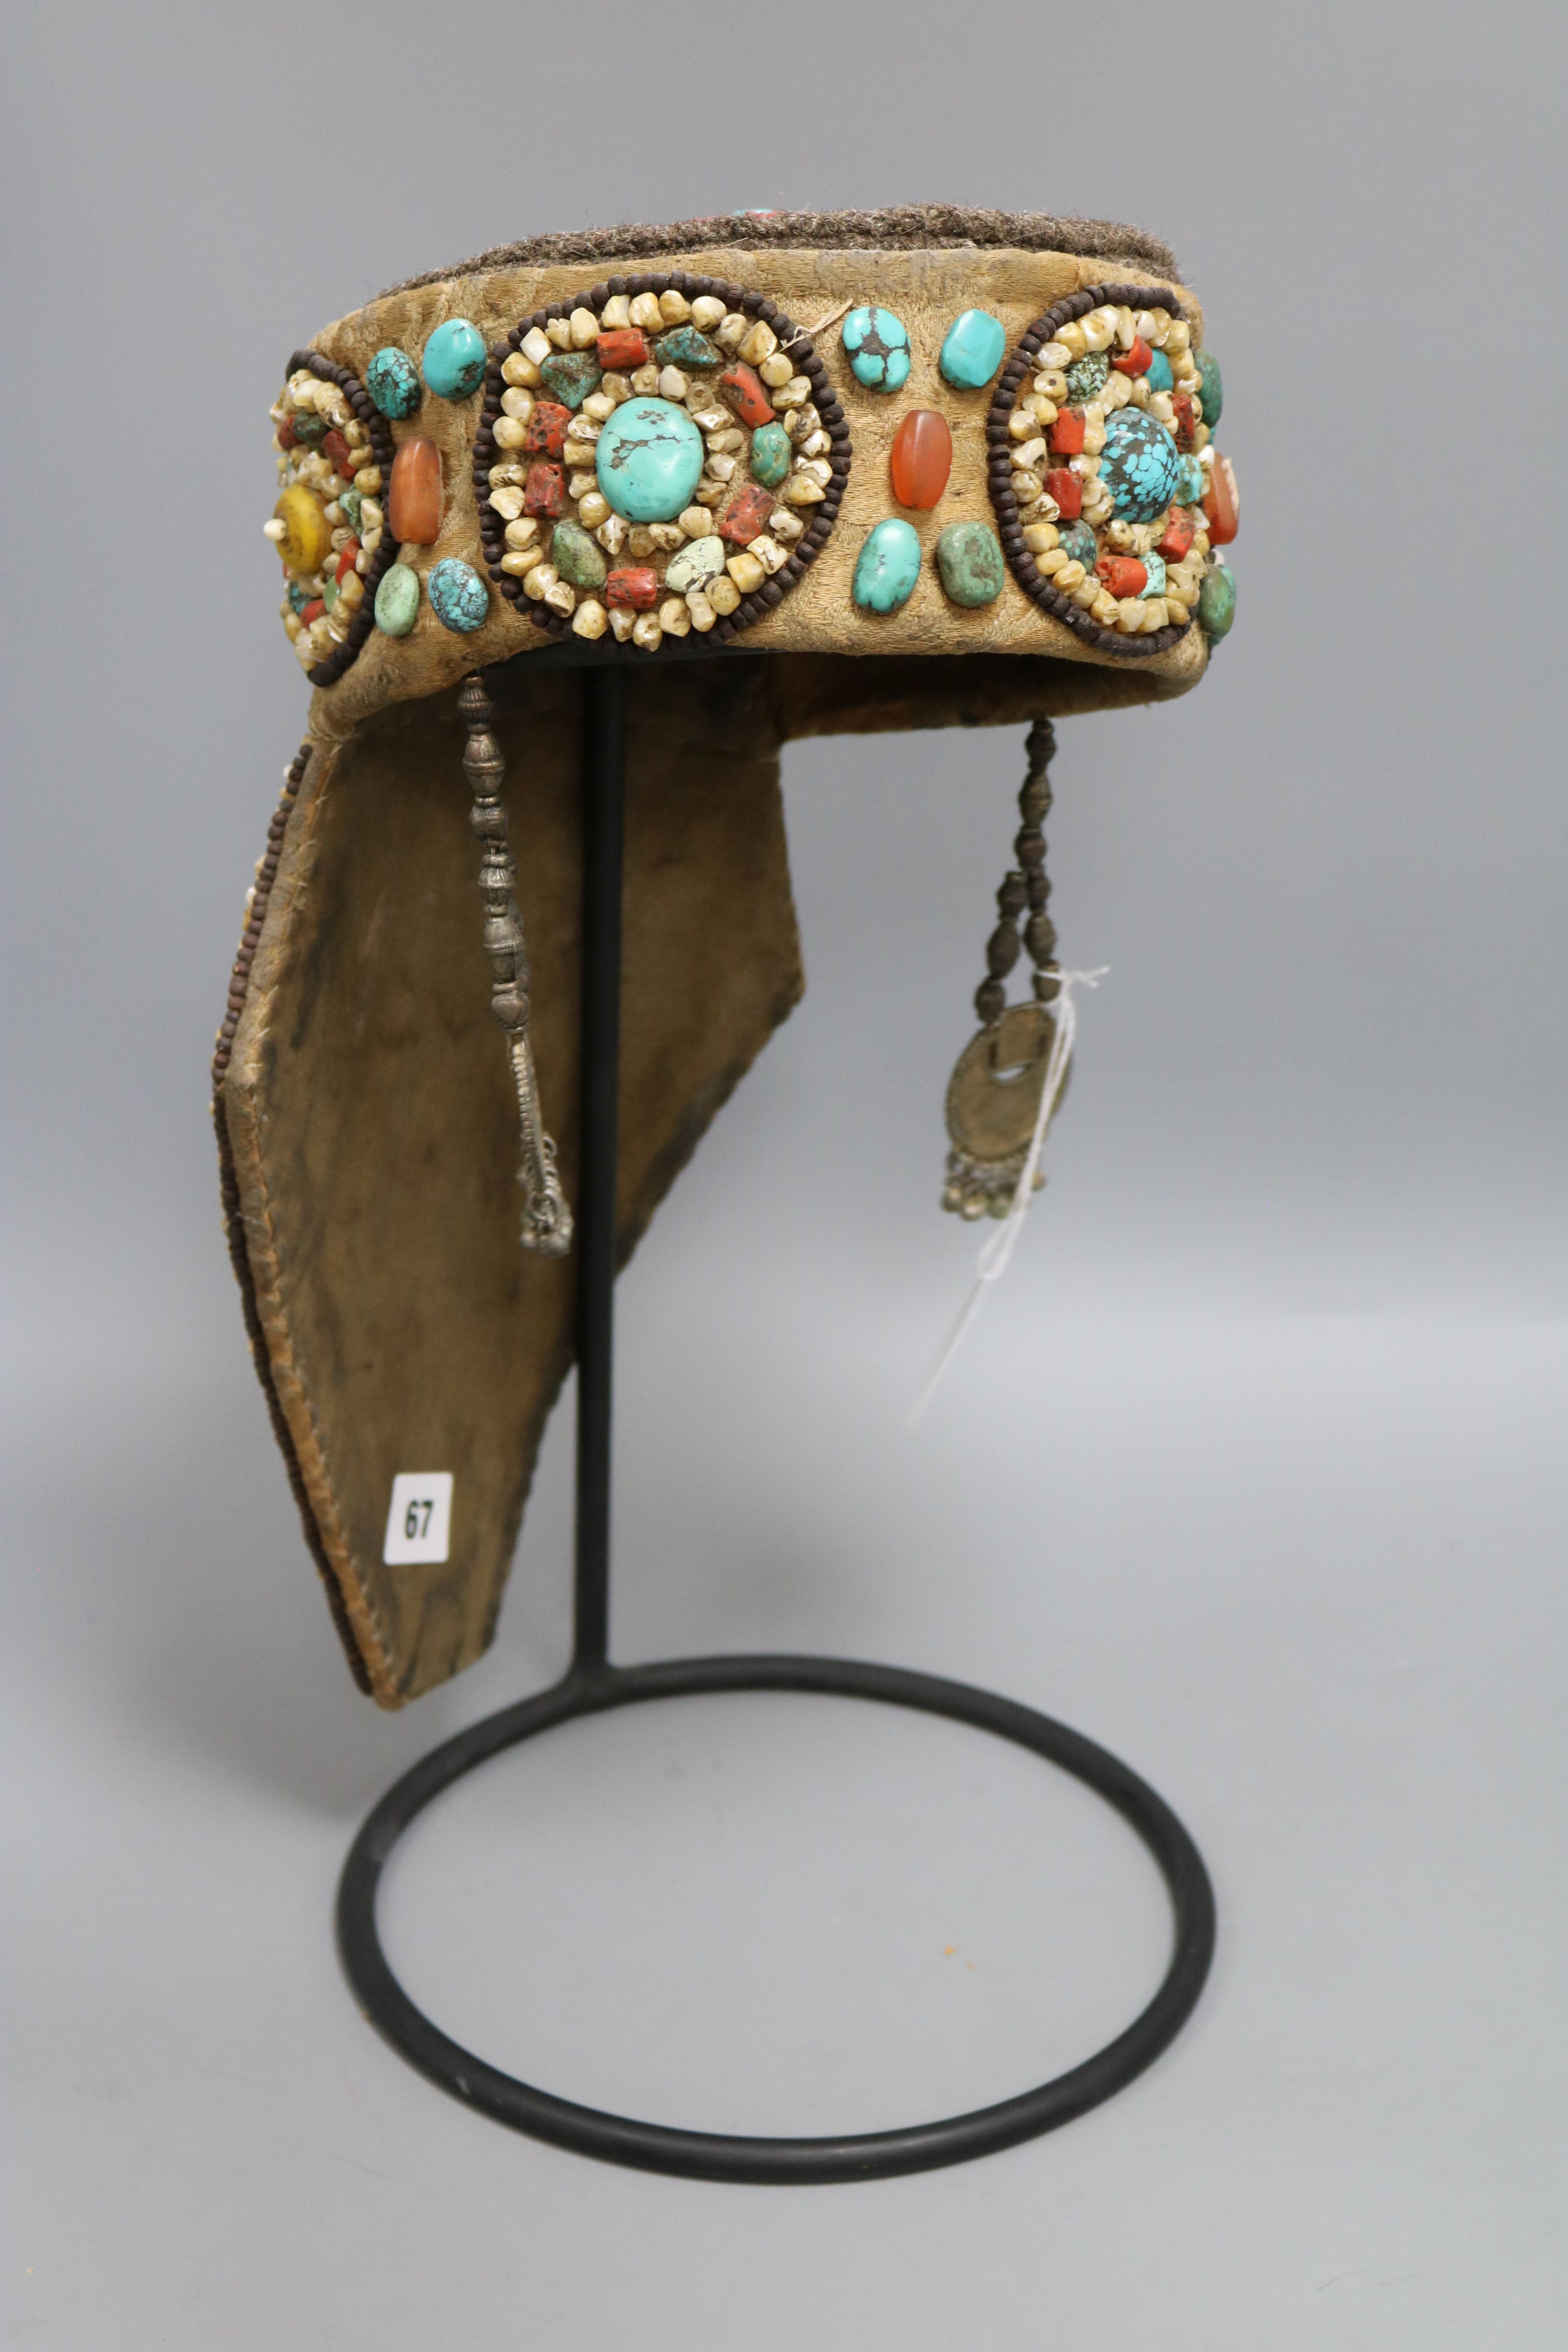 A Tibetan headpiece on stand - Image 2 of 3